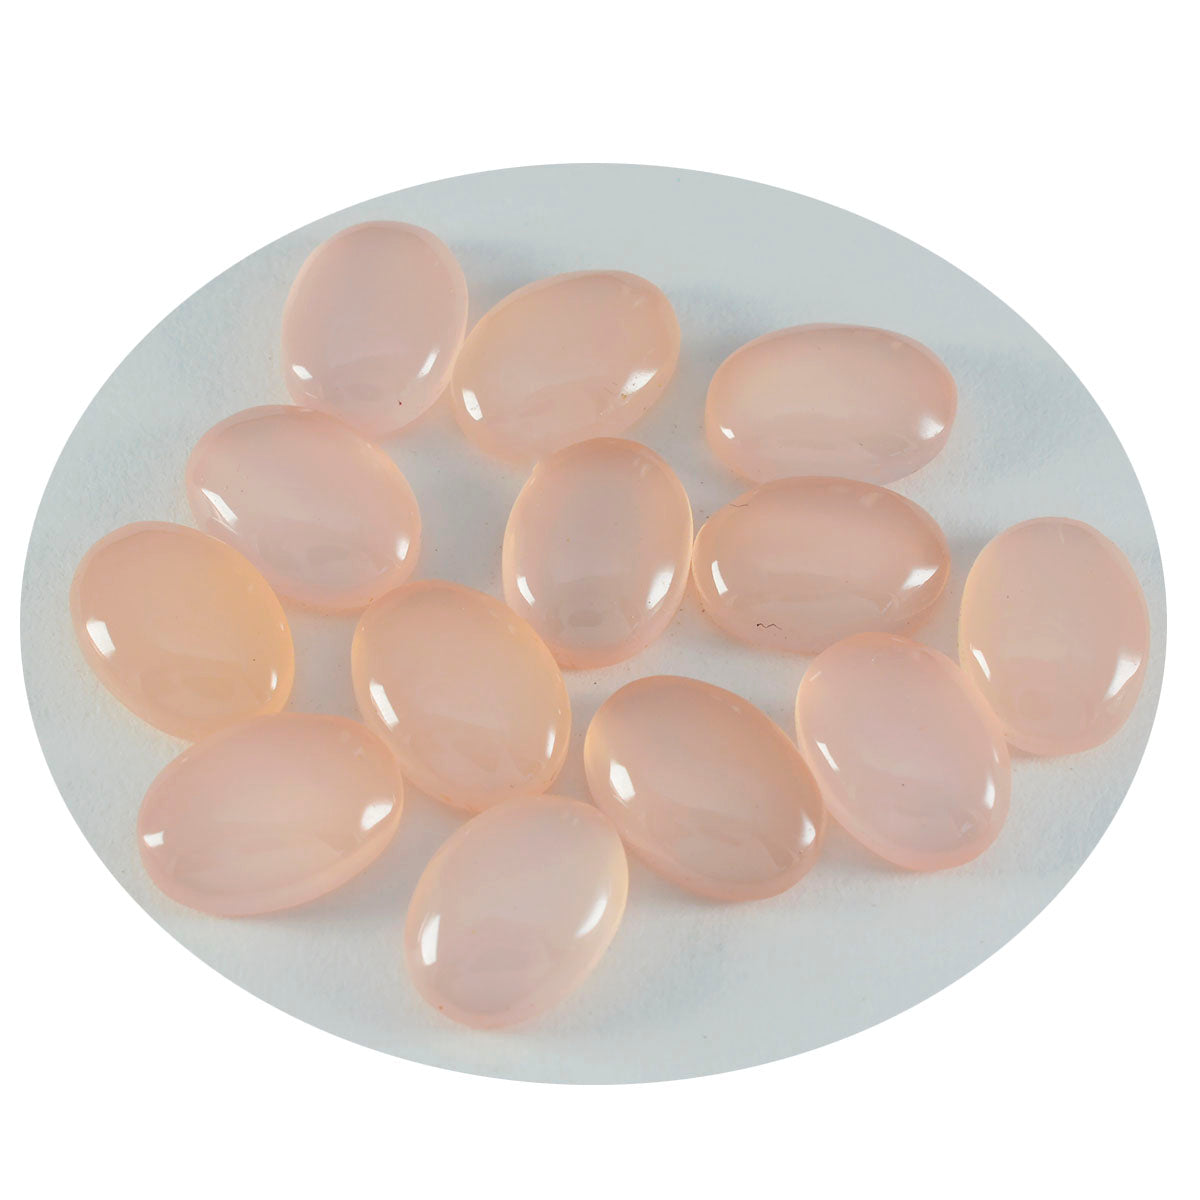 Riyogems 1PC Pink Rose Quartz Cabochon 8x10 mm Oval Shape great Quality Loose Stone